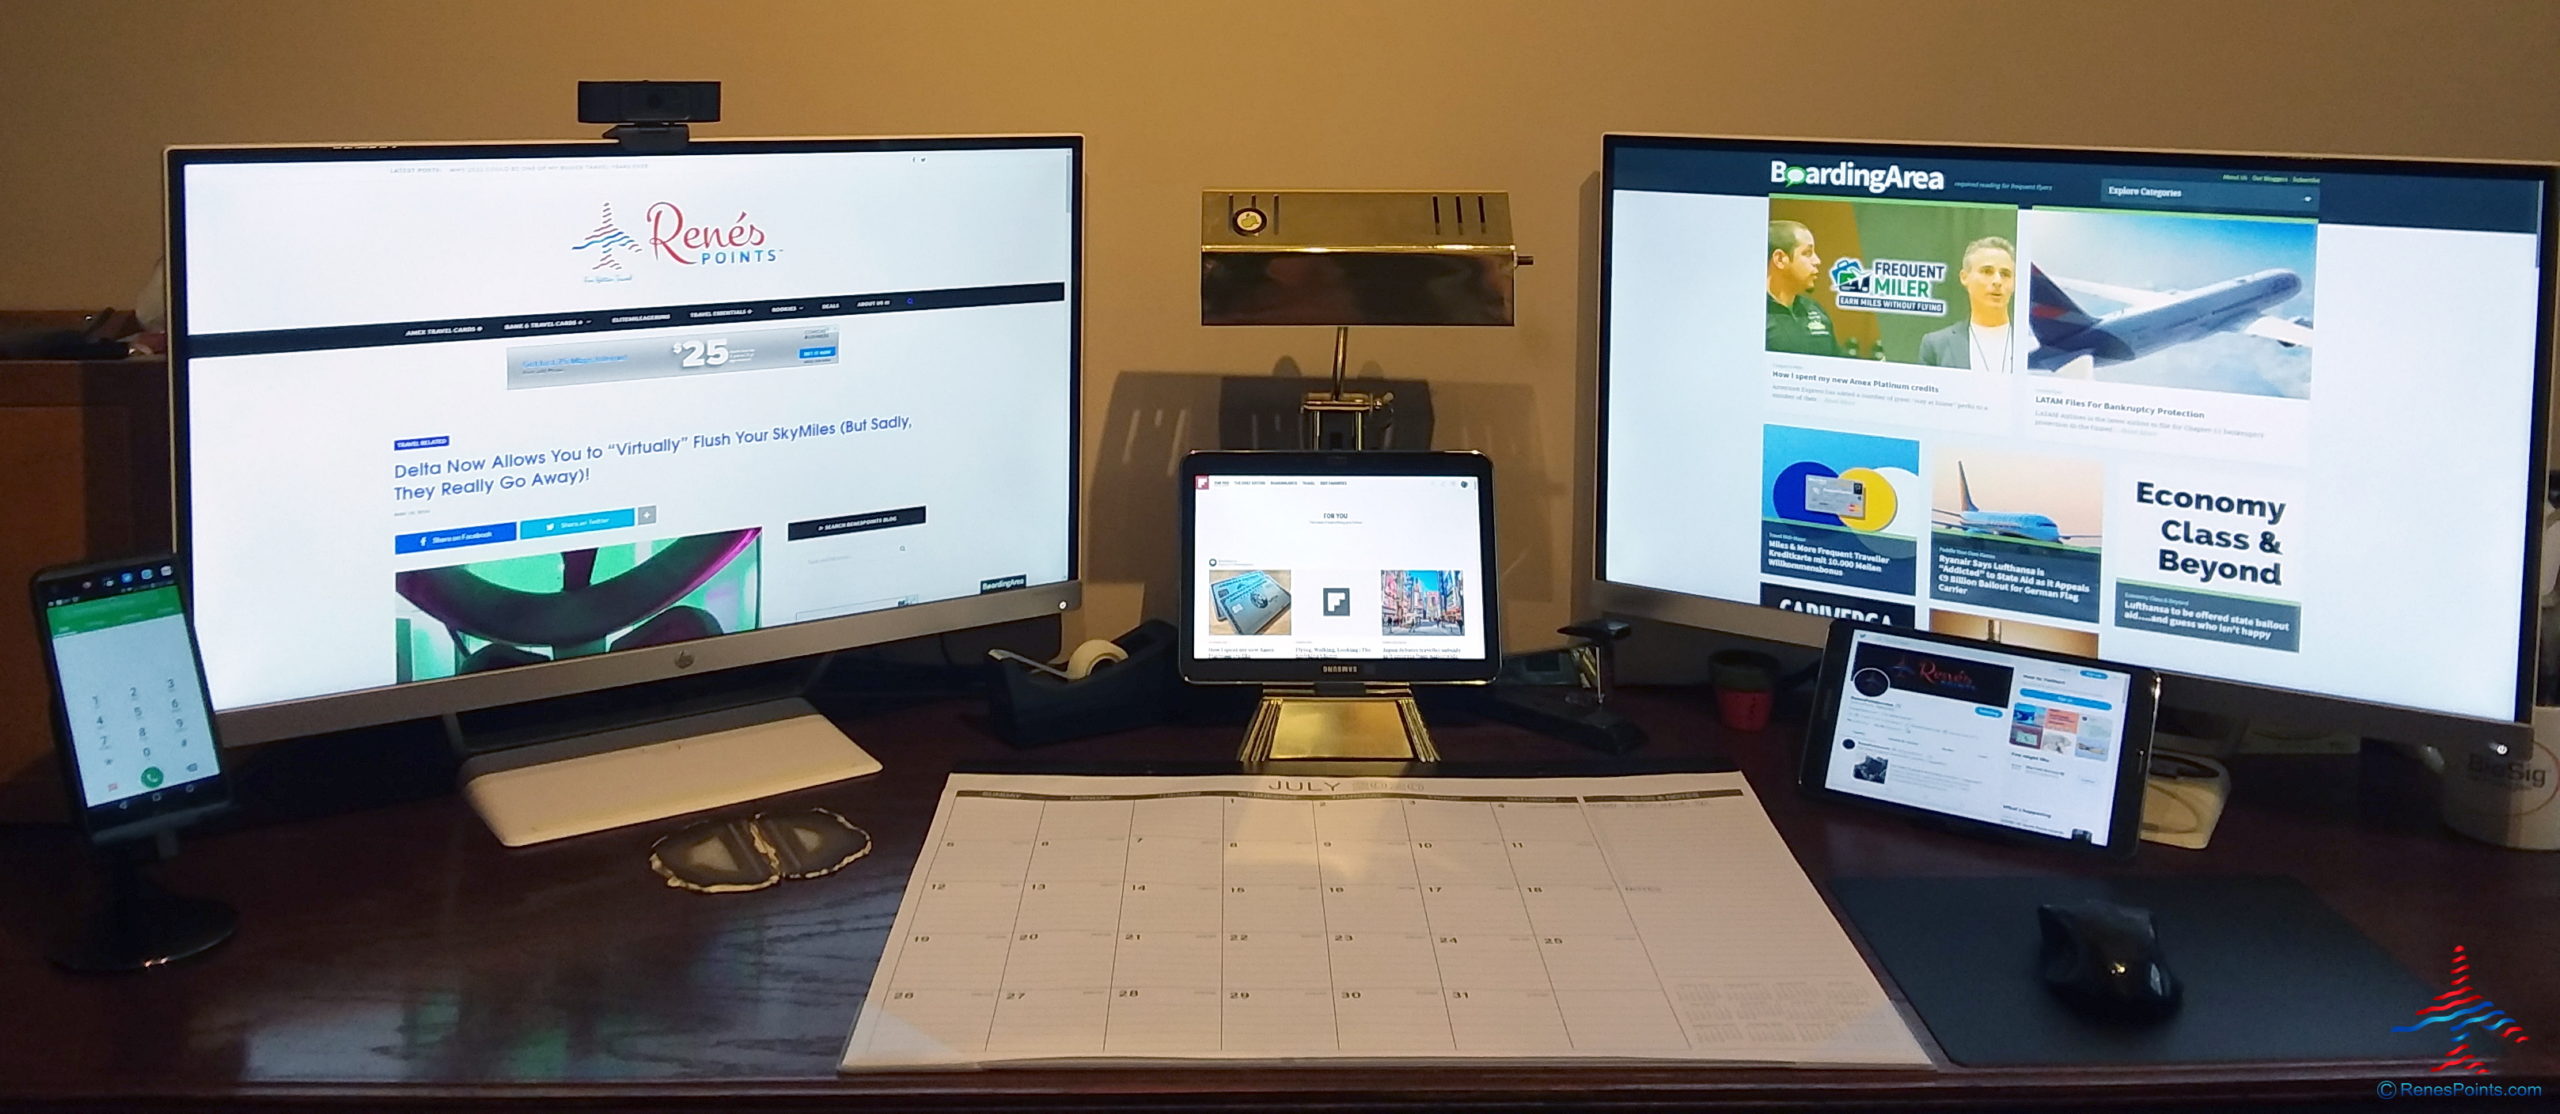 Setup for Zoom Hosting and Blogging - 4 Monitors